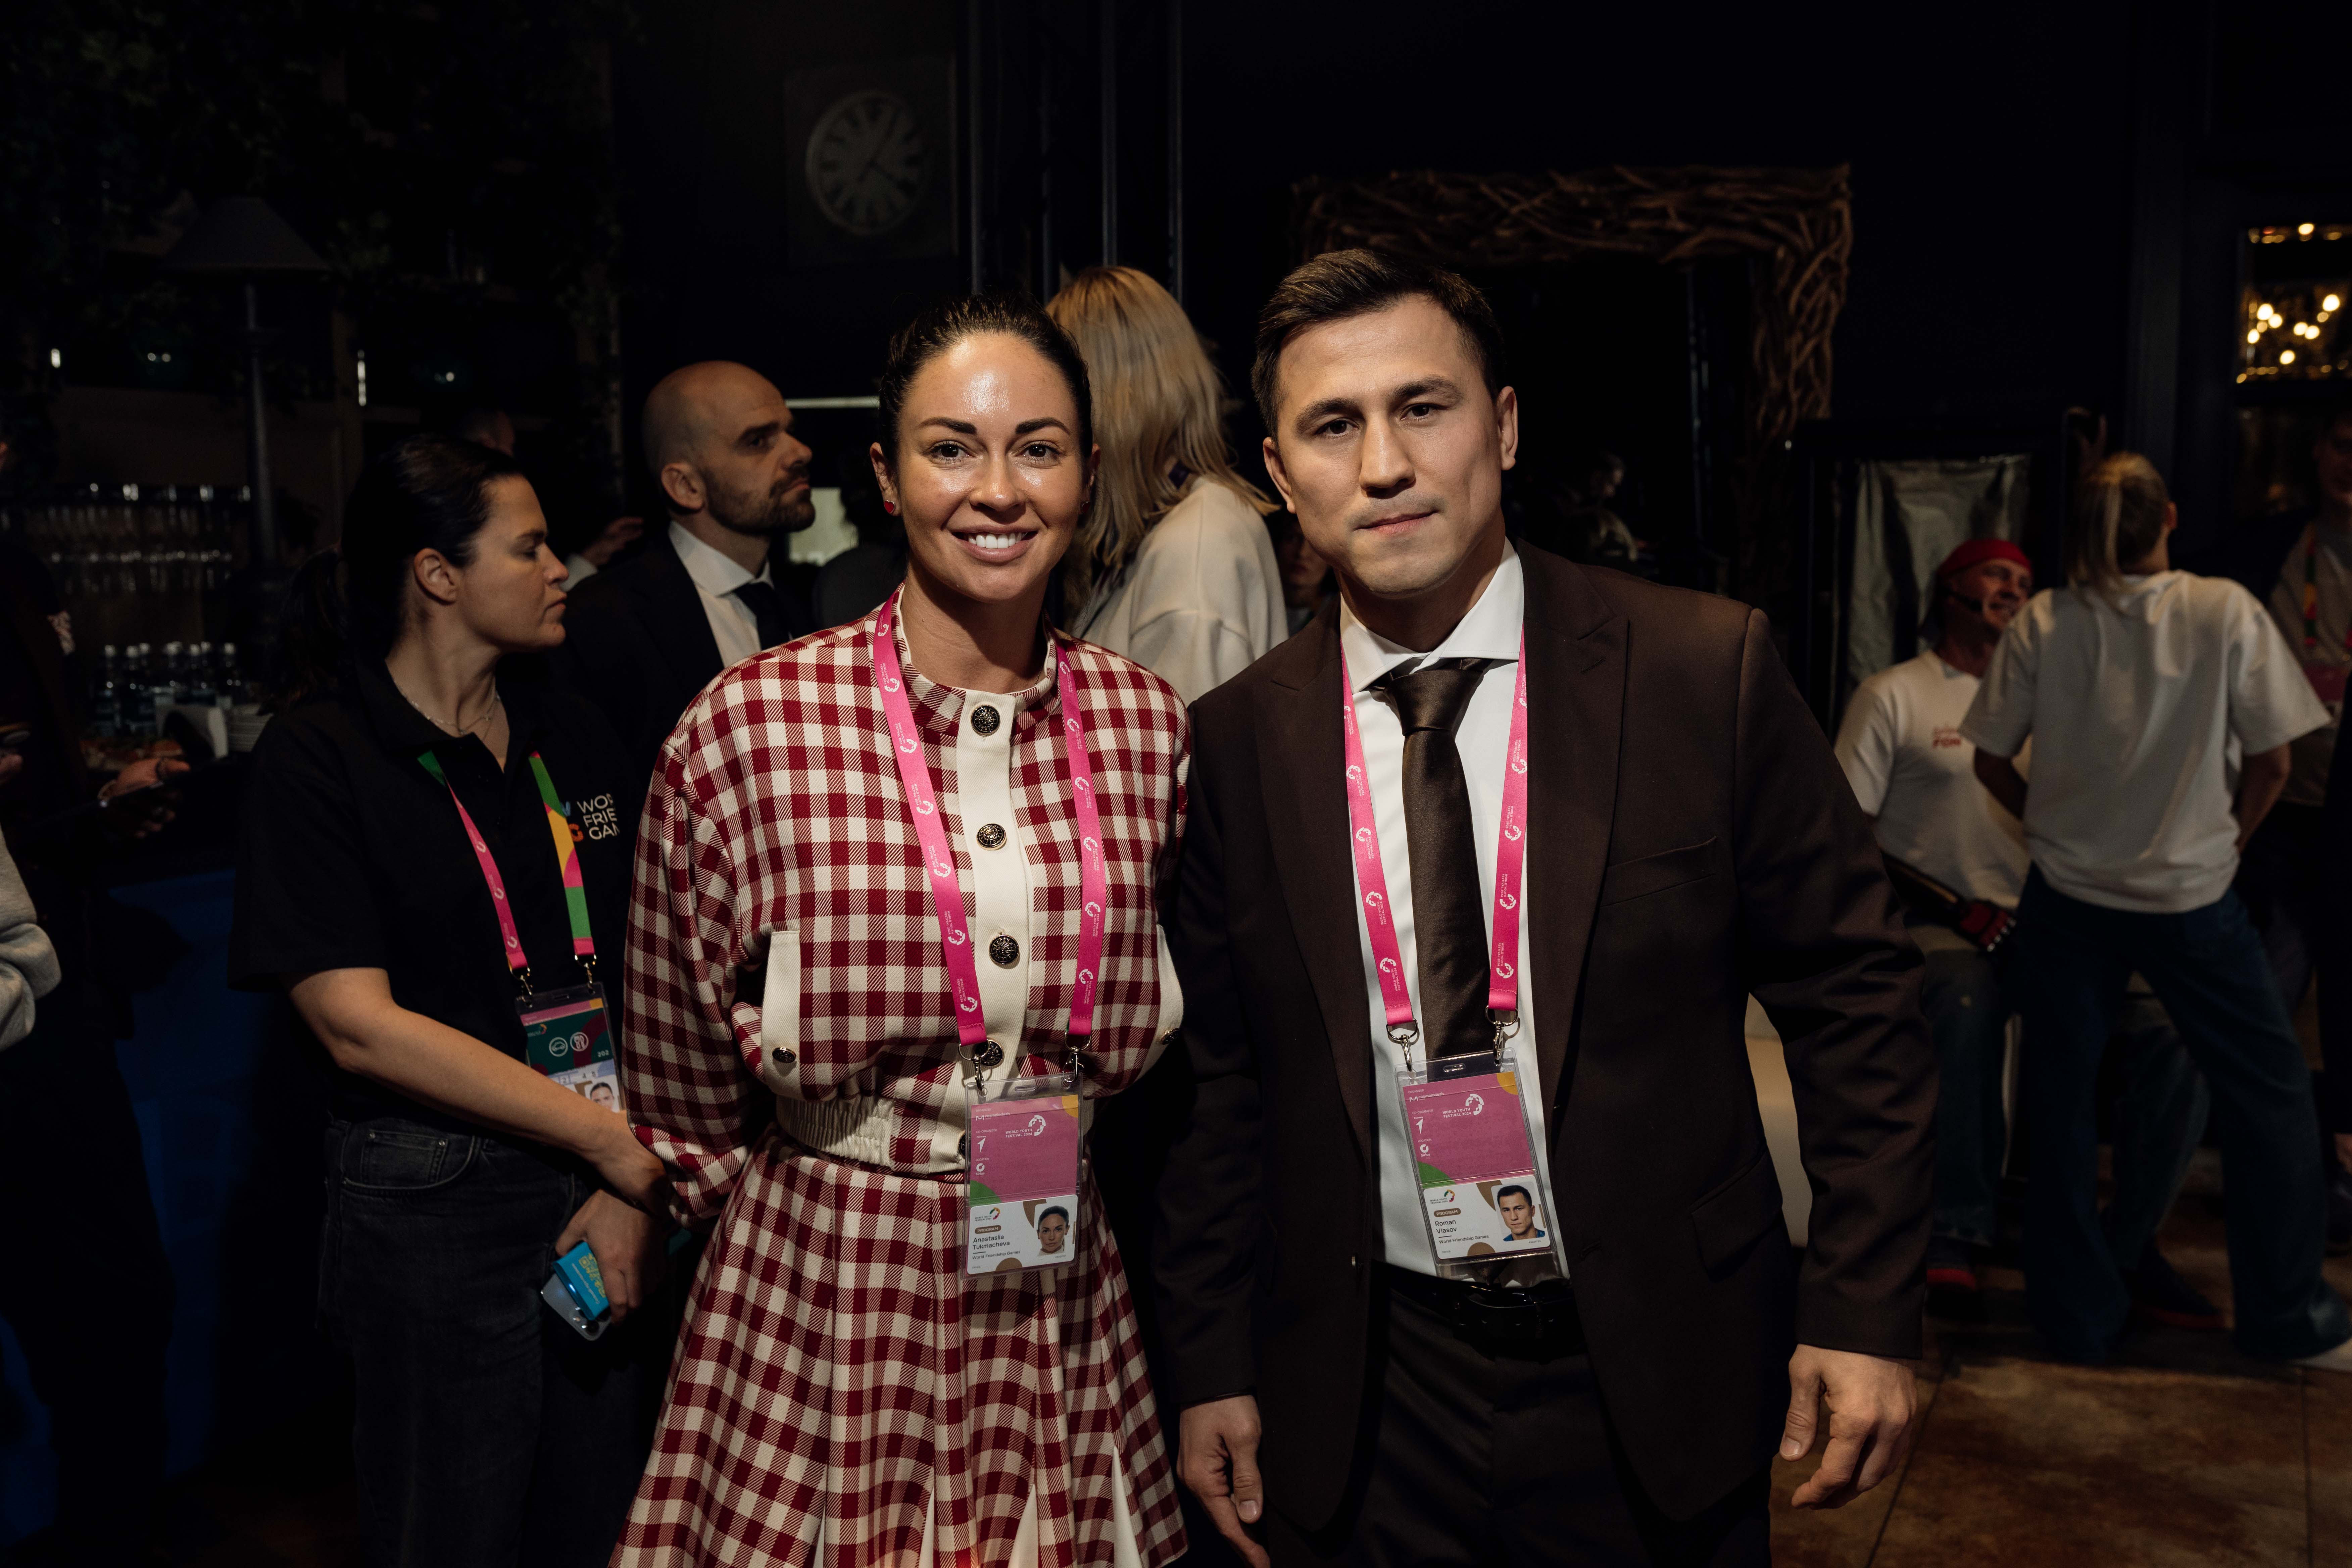 Roman Vlasov and Anastasia Tukmacheva Become Ambassadors of the Games